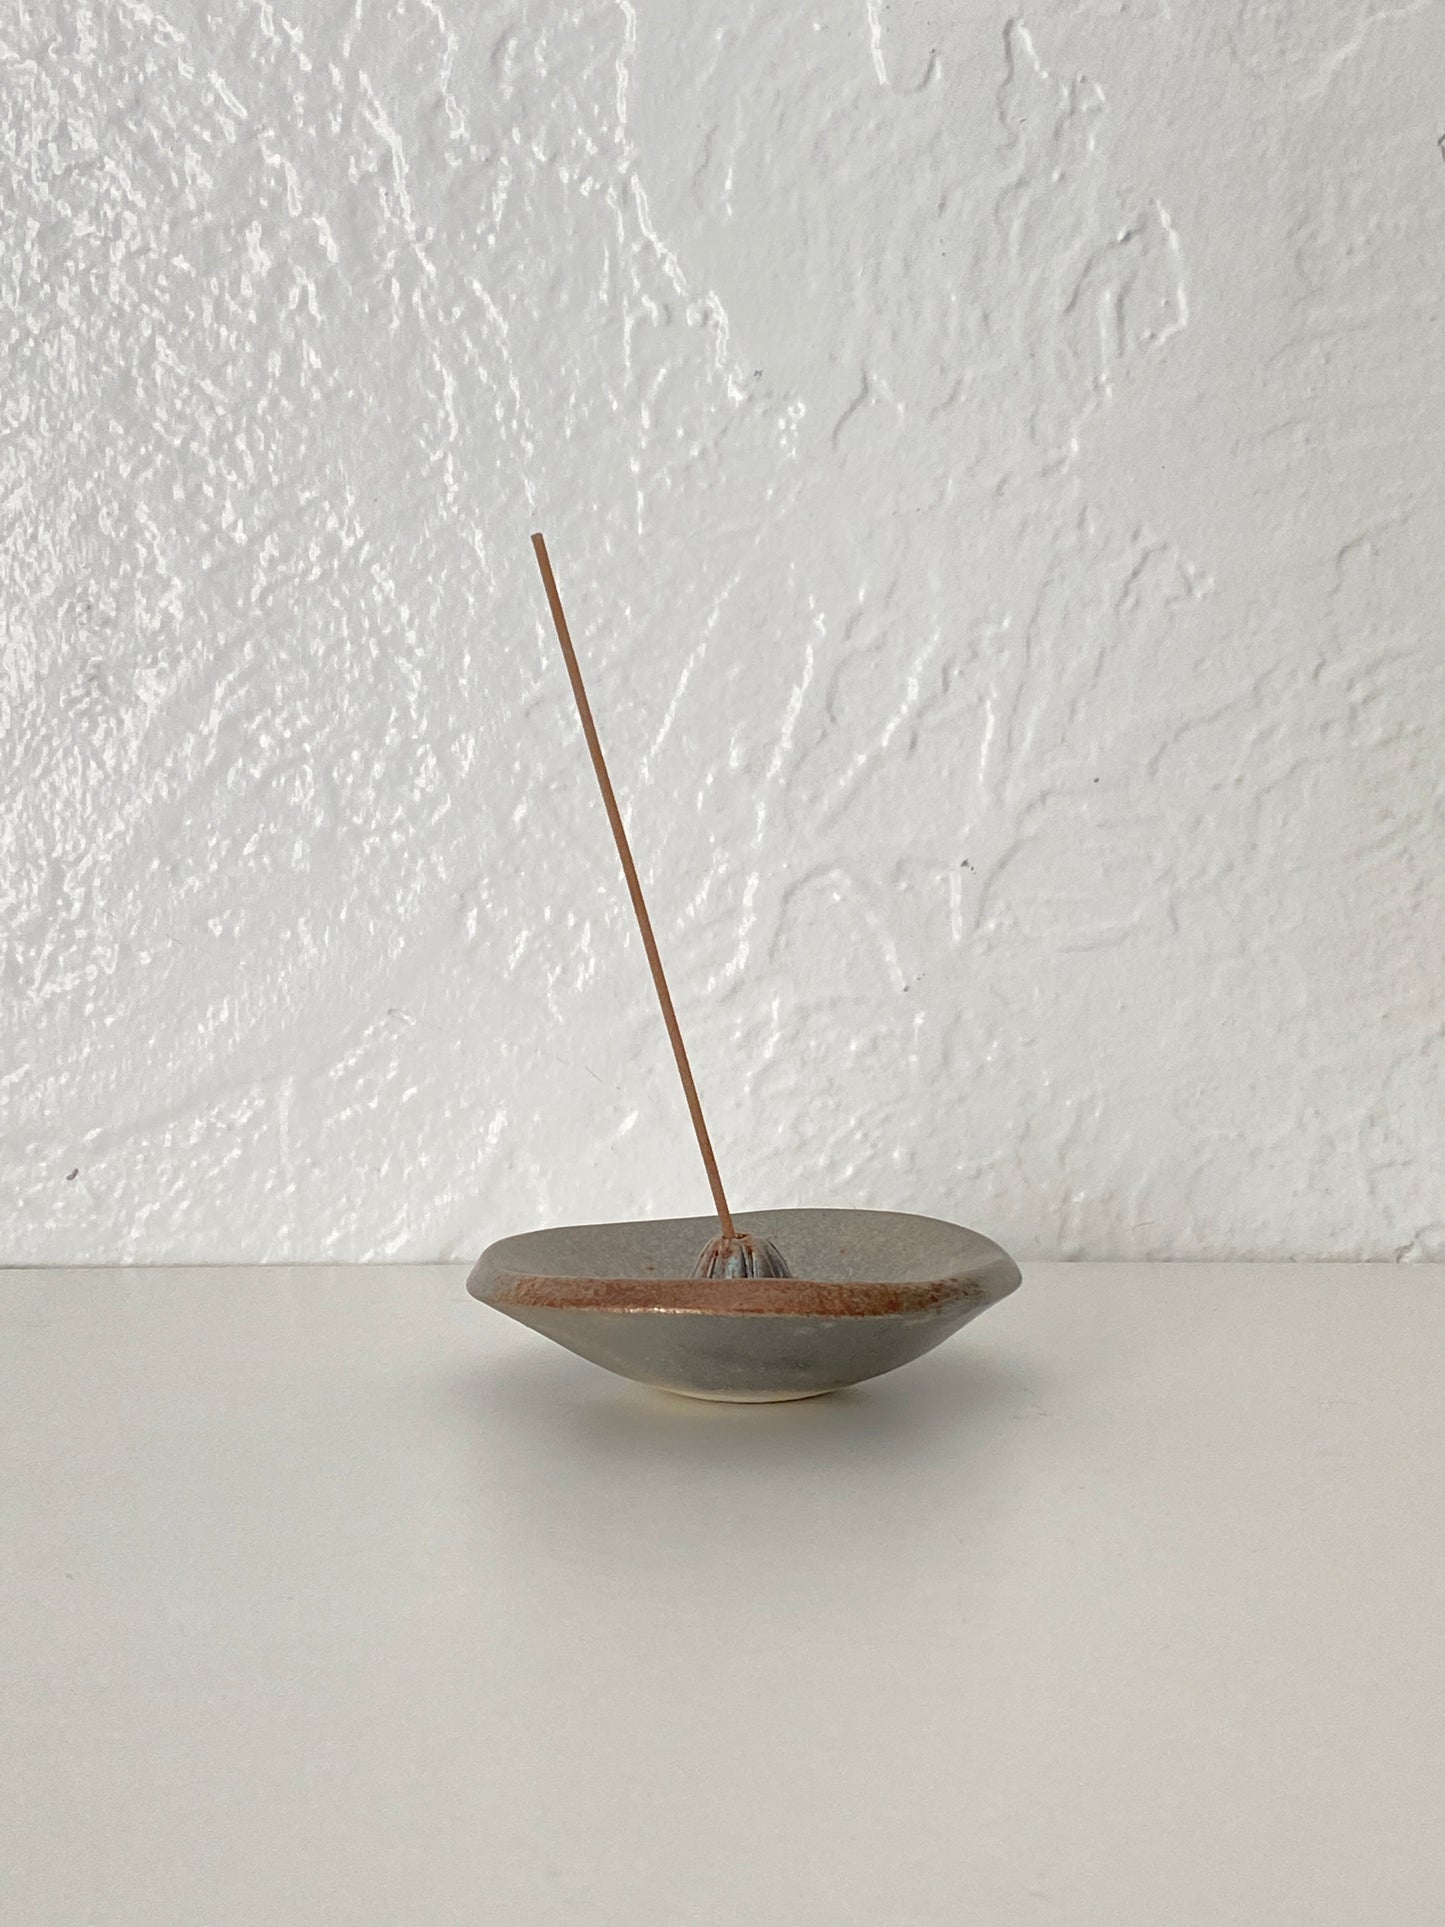 raku fired incense burner - smokey copper